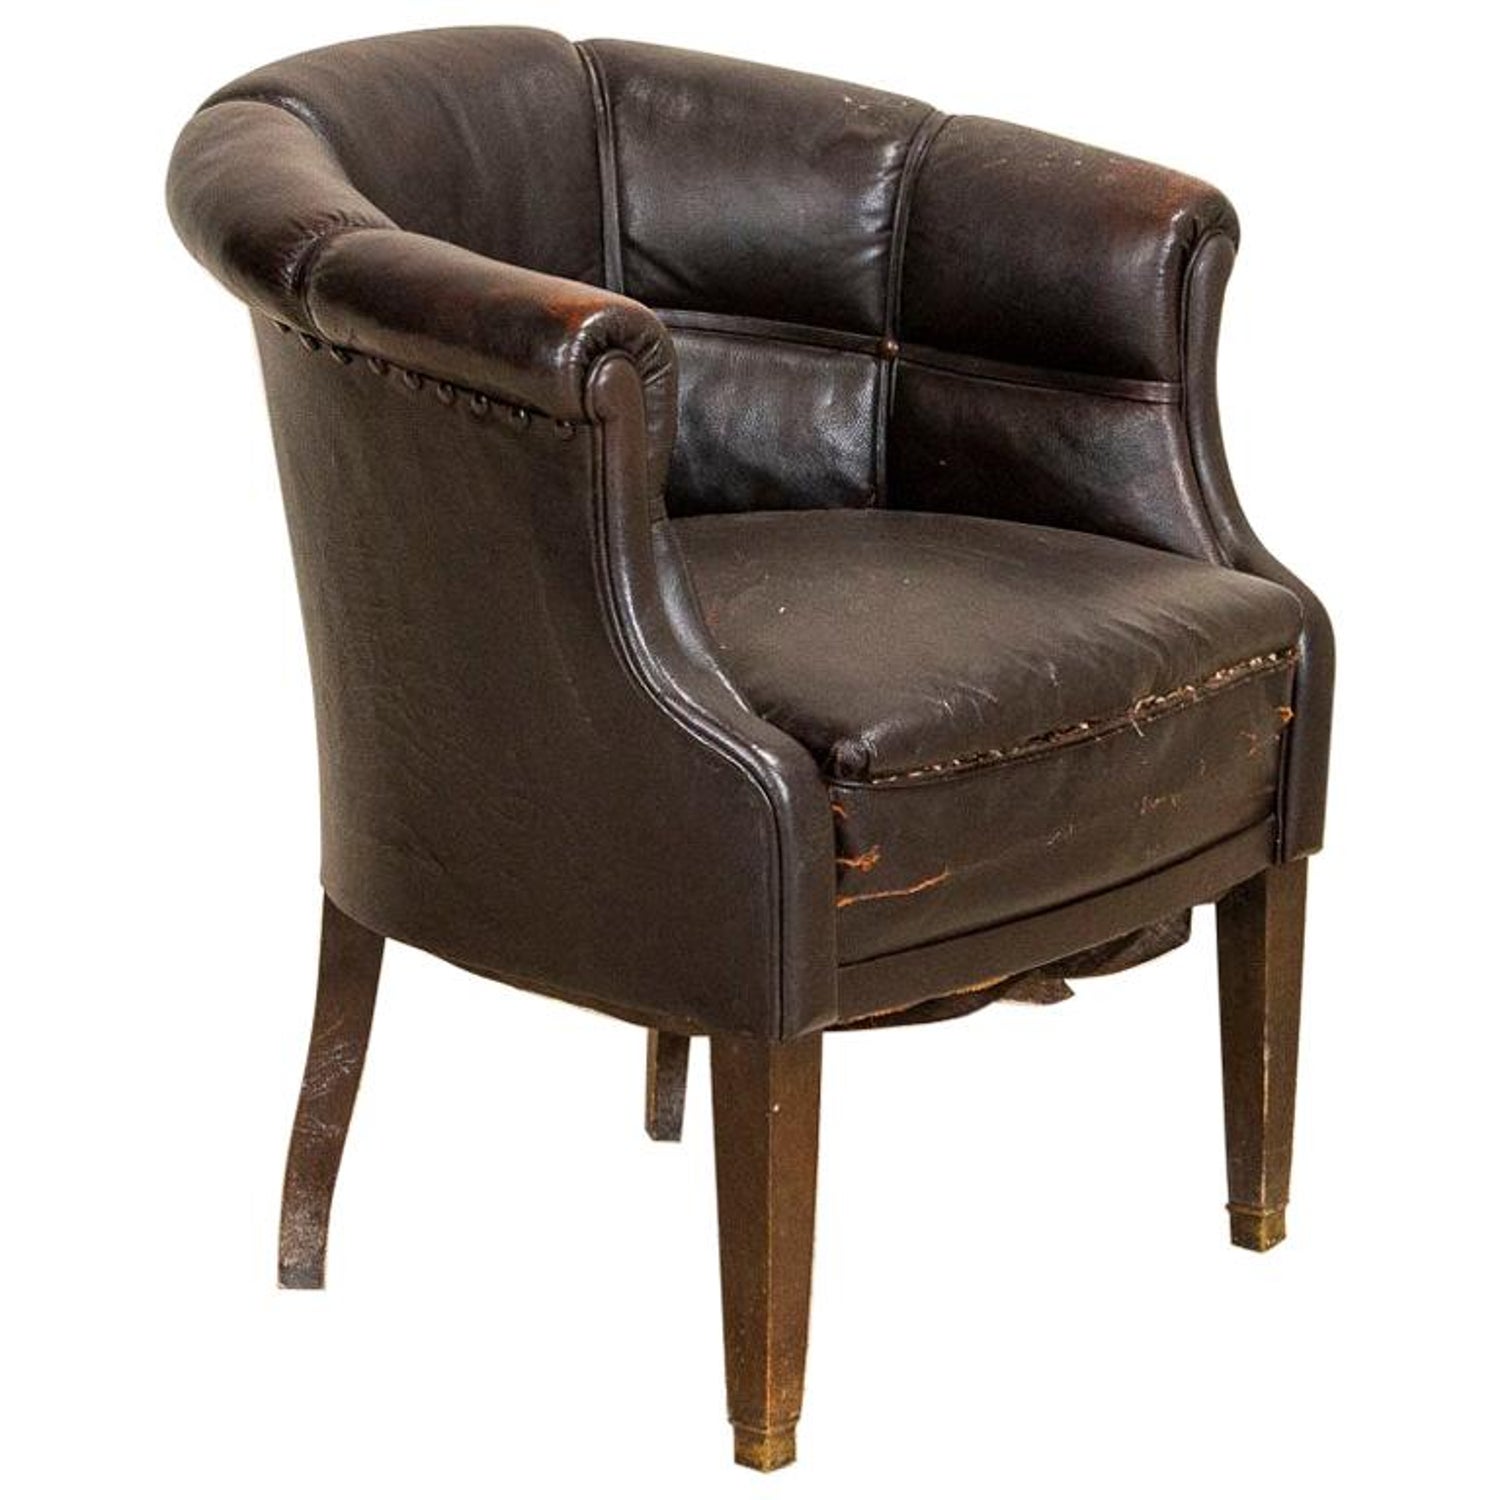 Antique Vintage Leather Barrel Shaped, Leather Chair Vintage